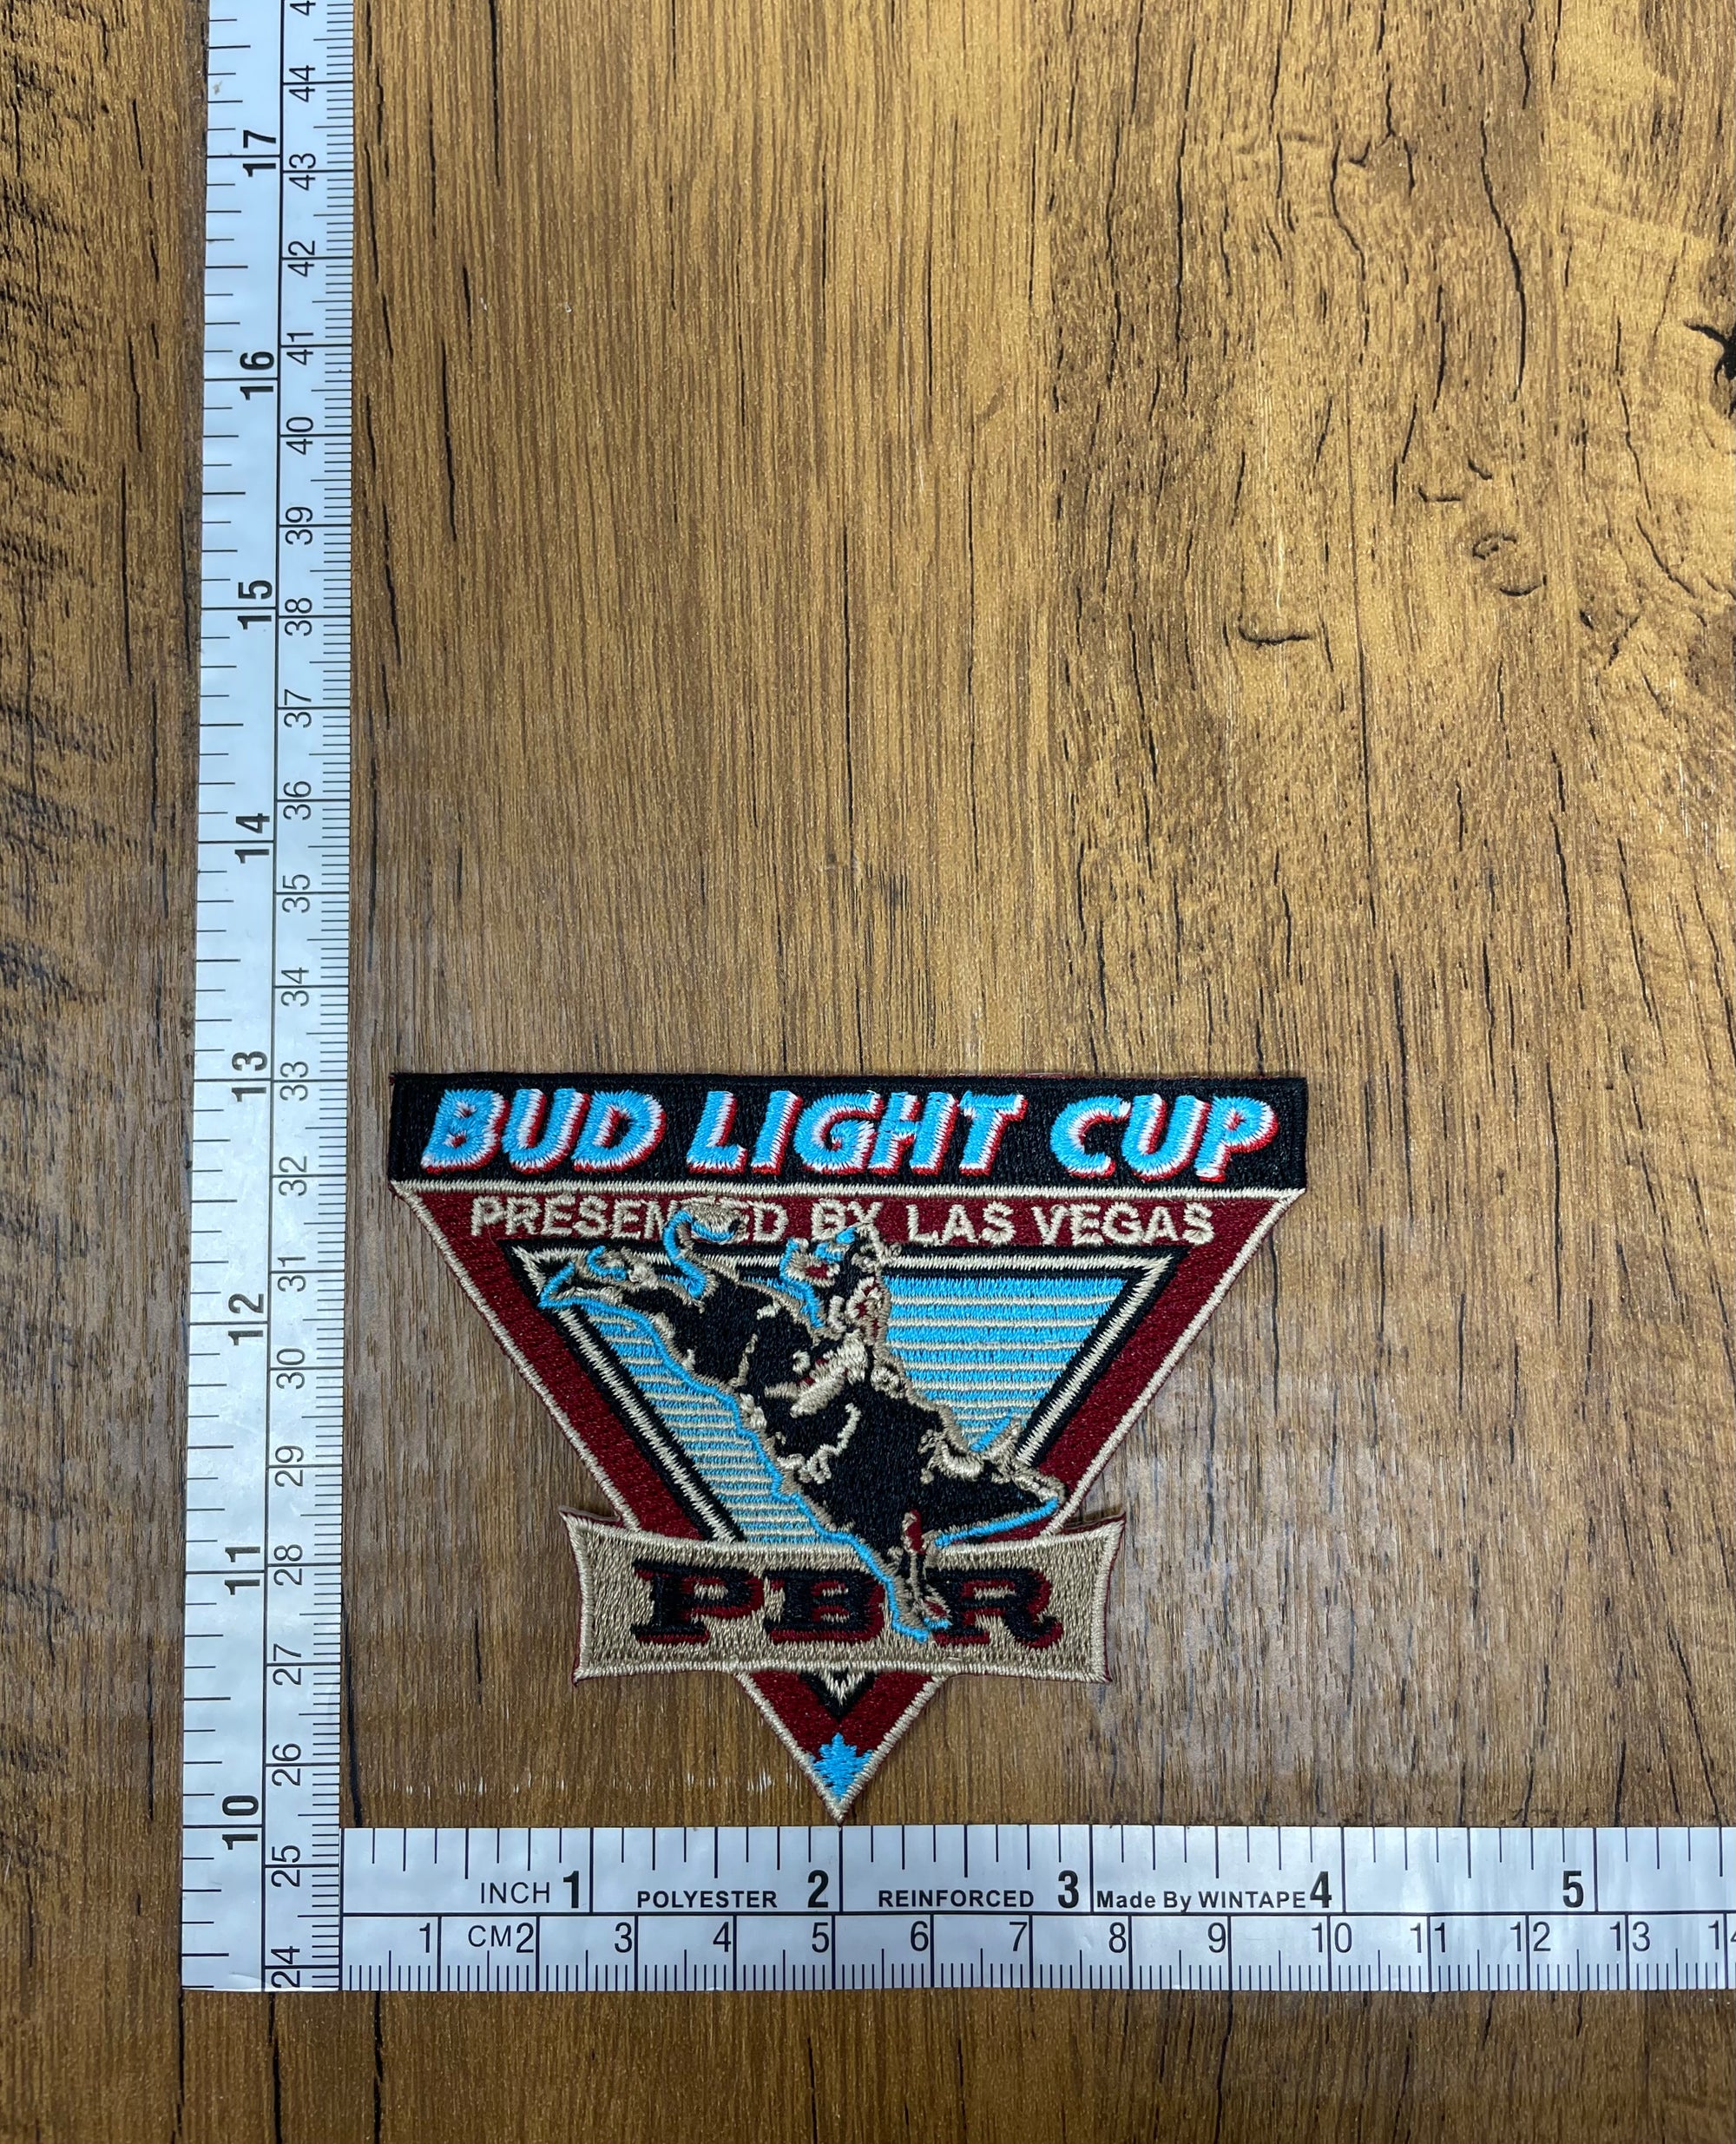 Bud Light Cup- Presented by Las Vegas PBR